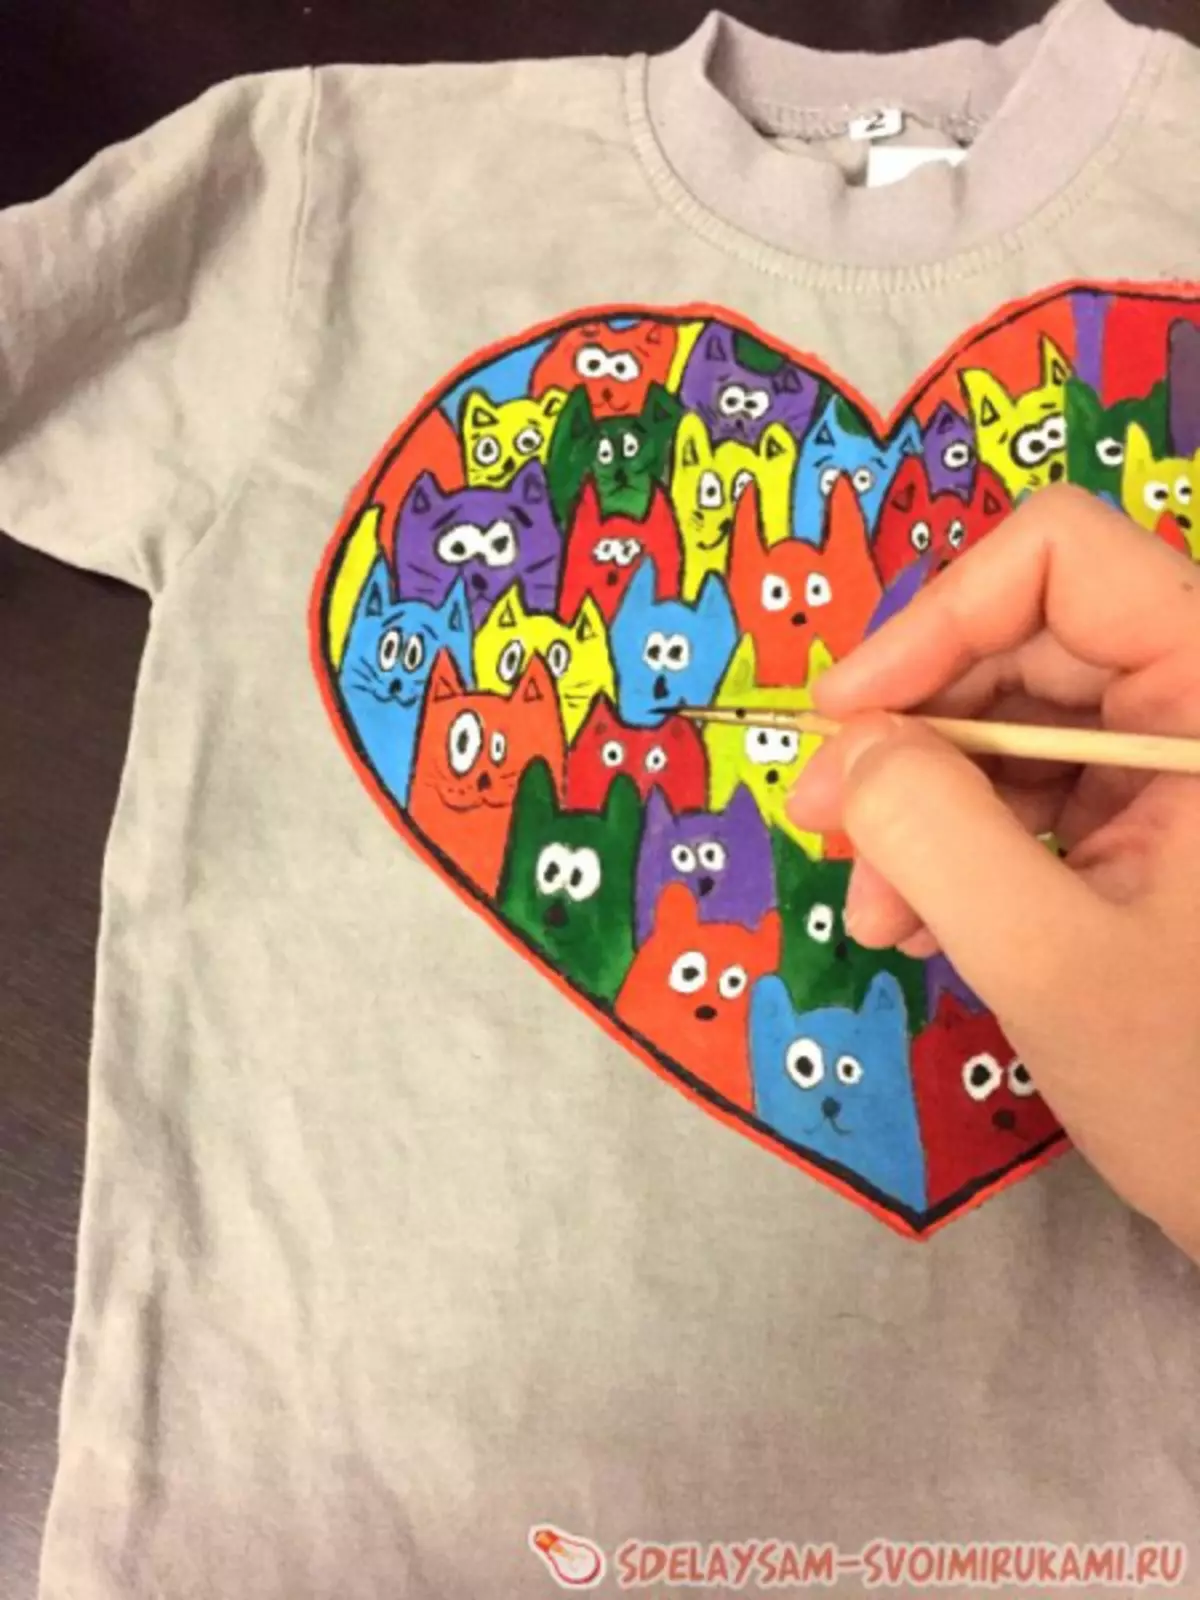 T-Shirts Painted. Վարպետության դաս բաղնիքի վրա երեխաների համար լուսանկարներով եւ տեսանյութերով